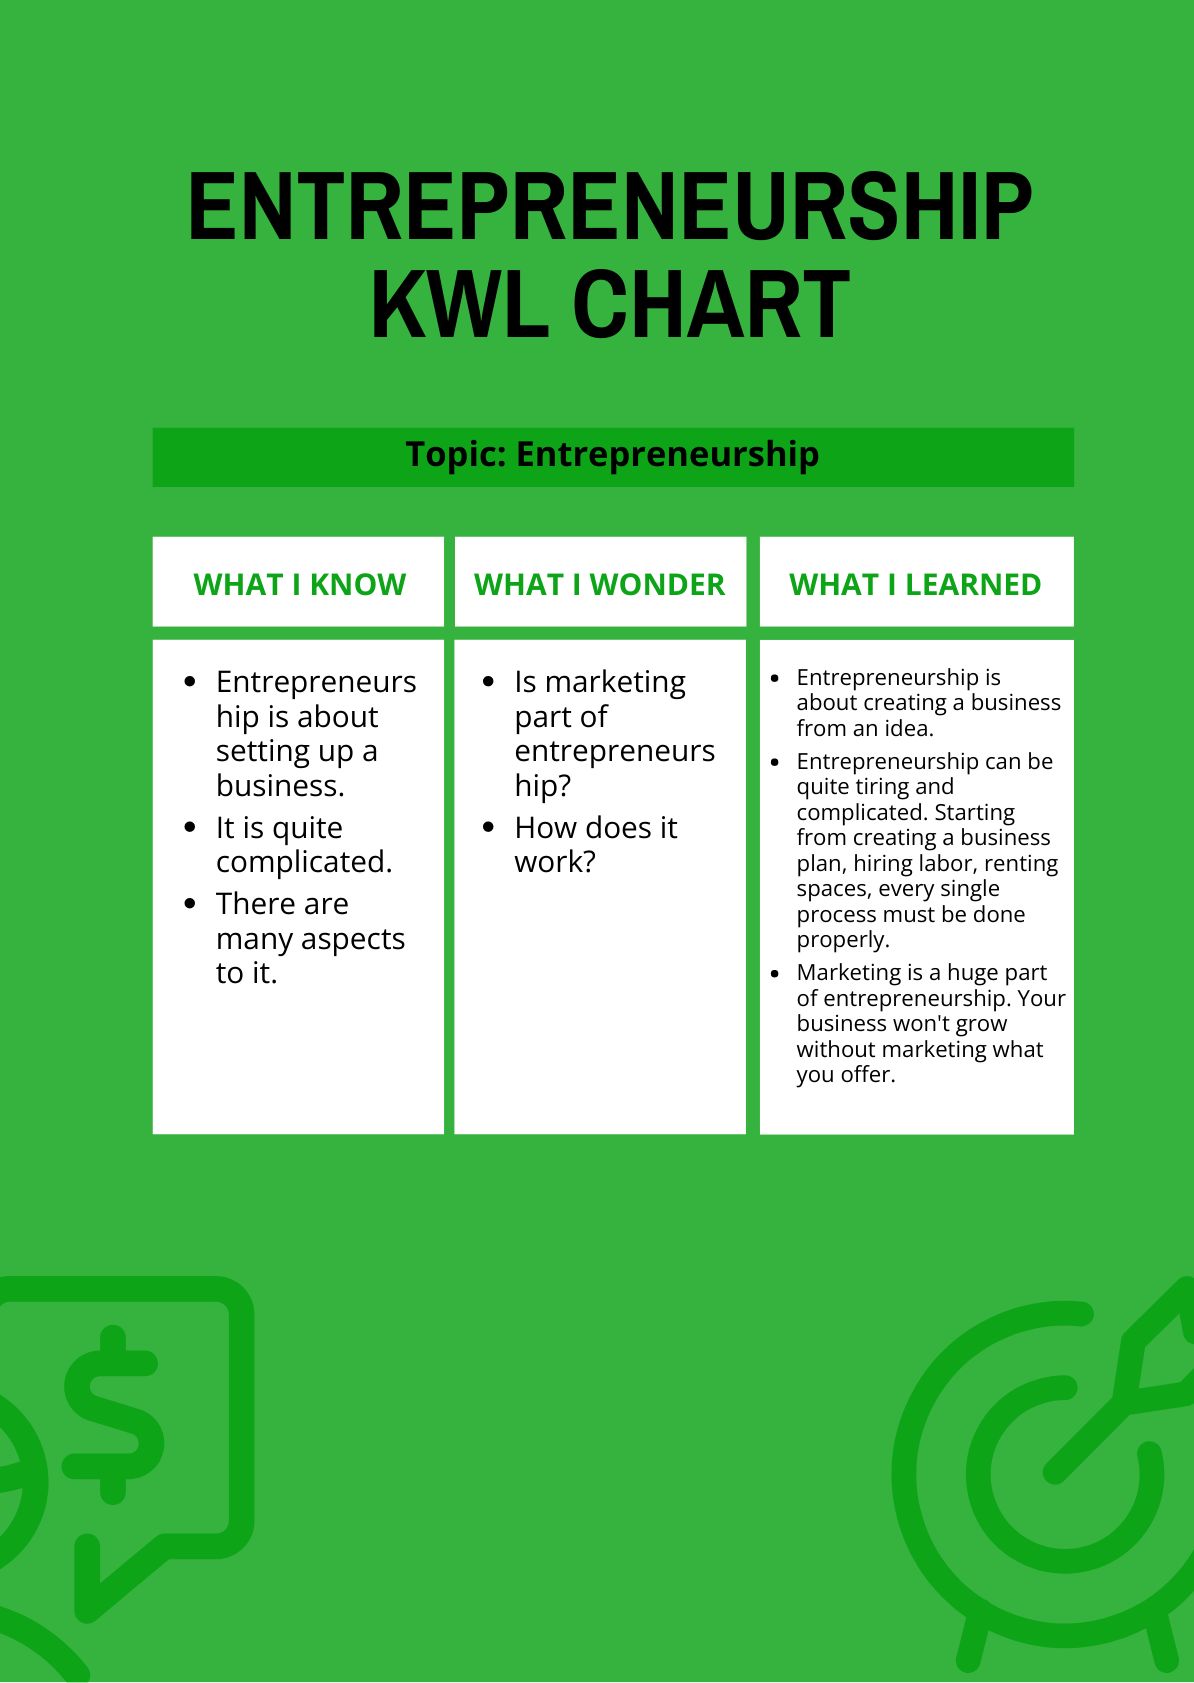 Entrepreneurship KWL Chart in PDF